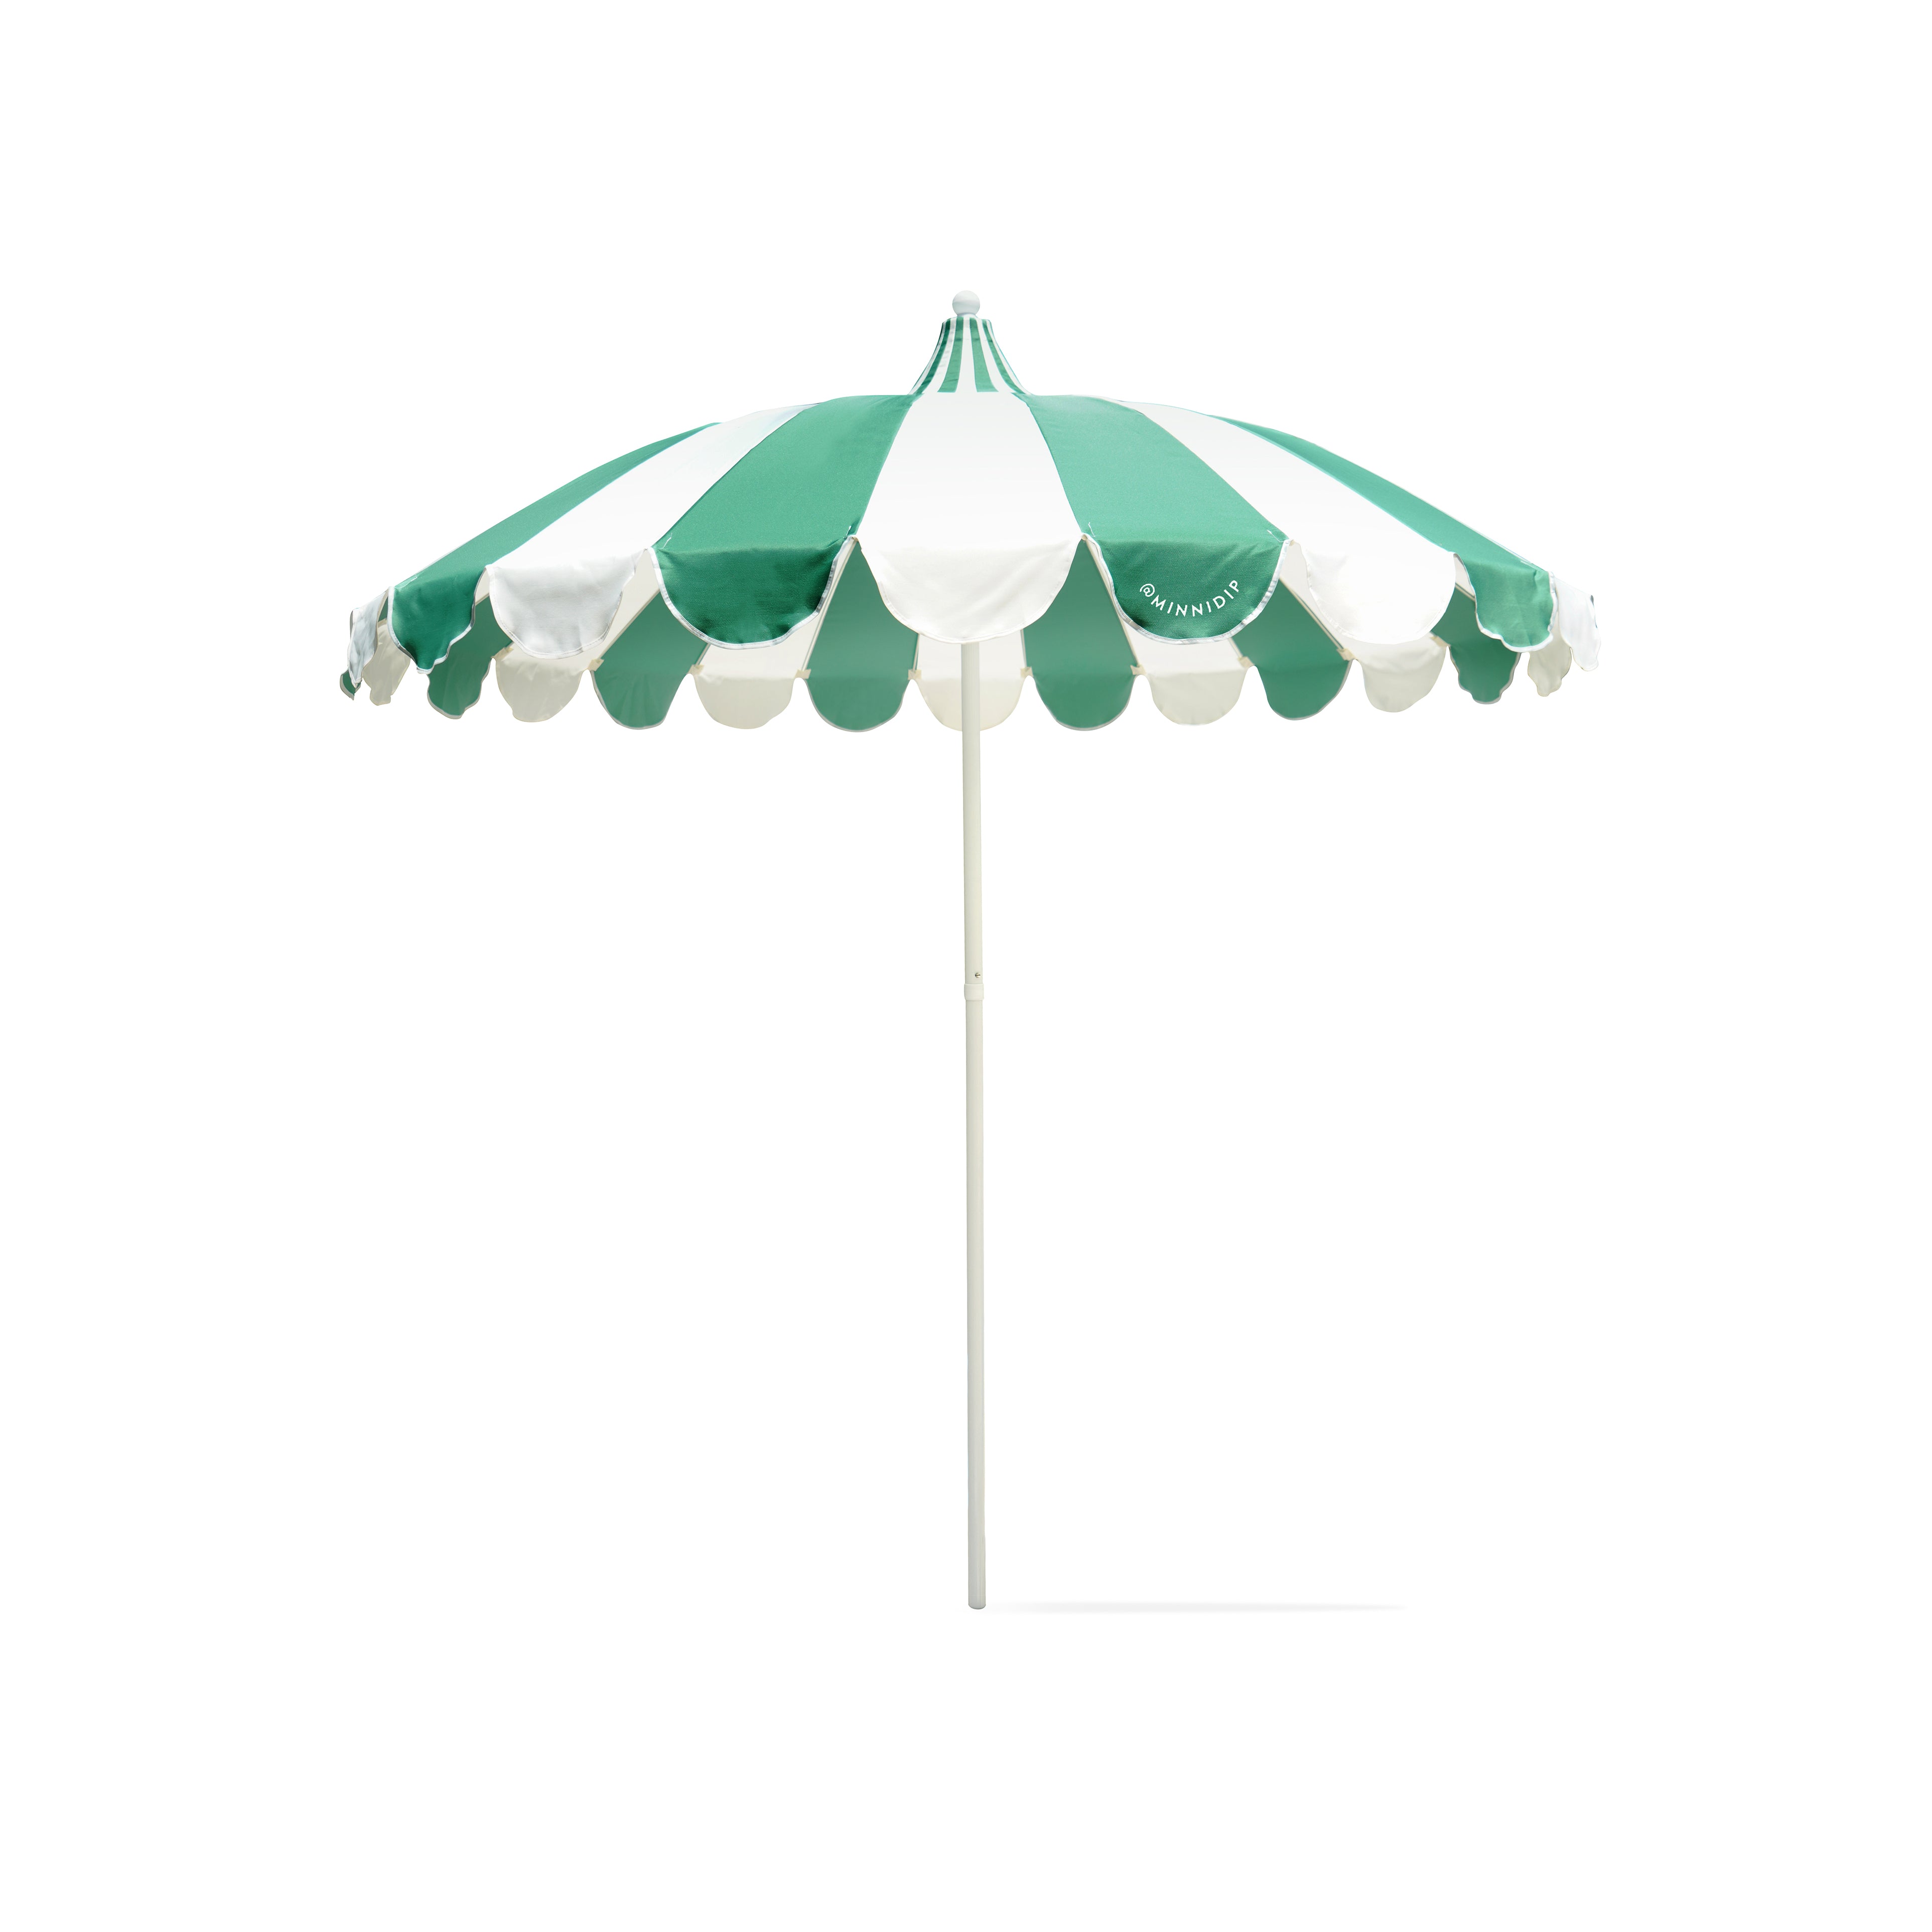 the SCALLOPED Market Umbrella in Topiary